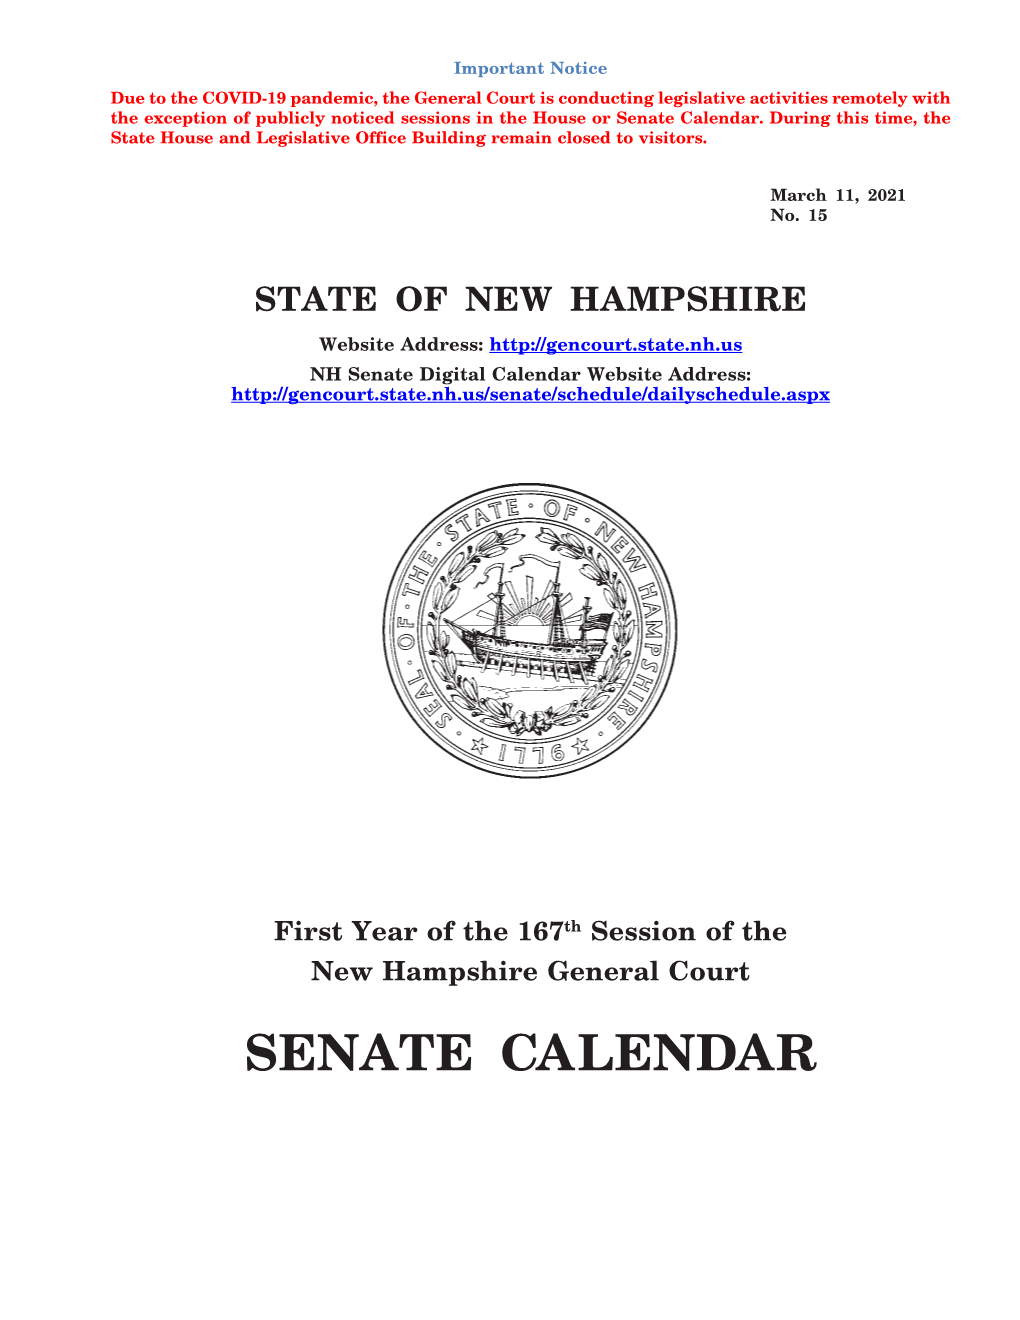 Senate Calendar